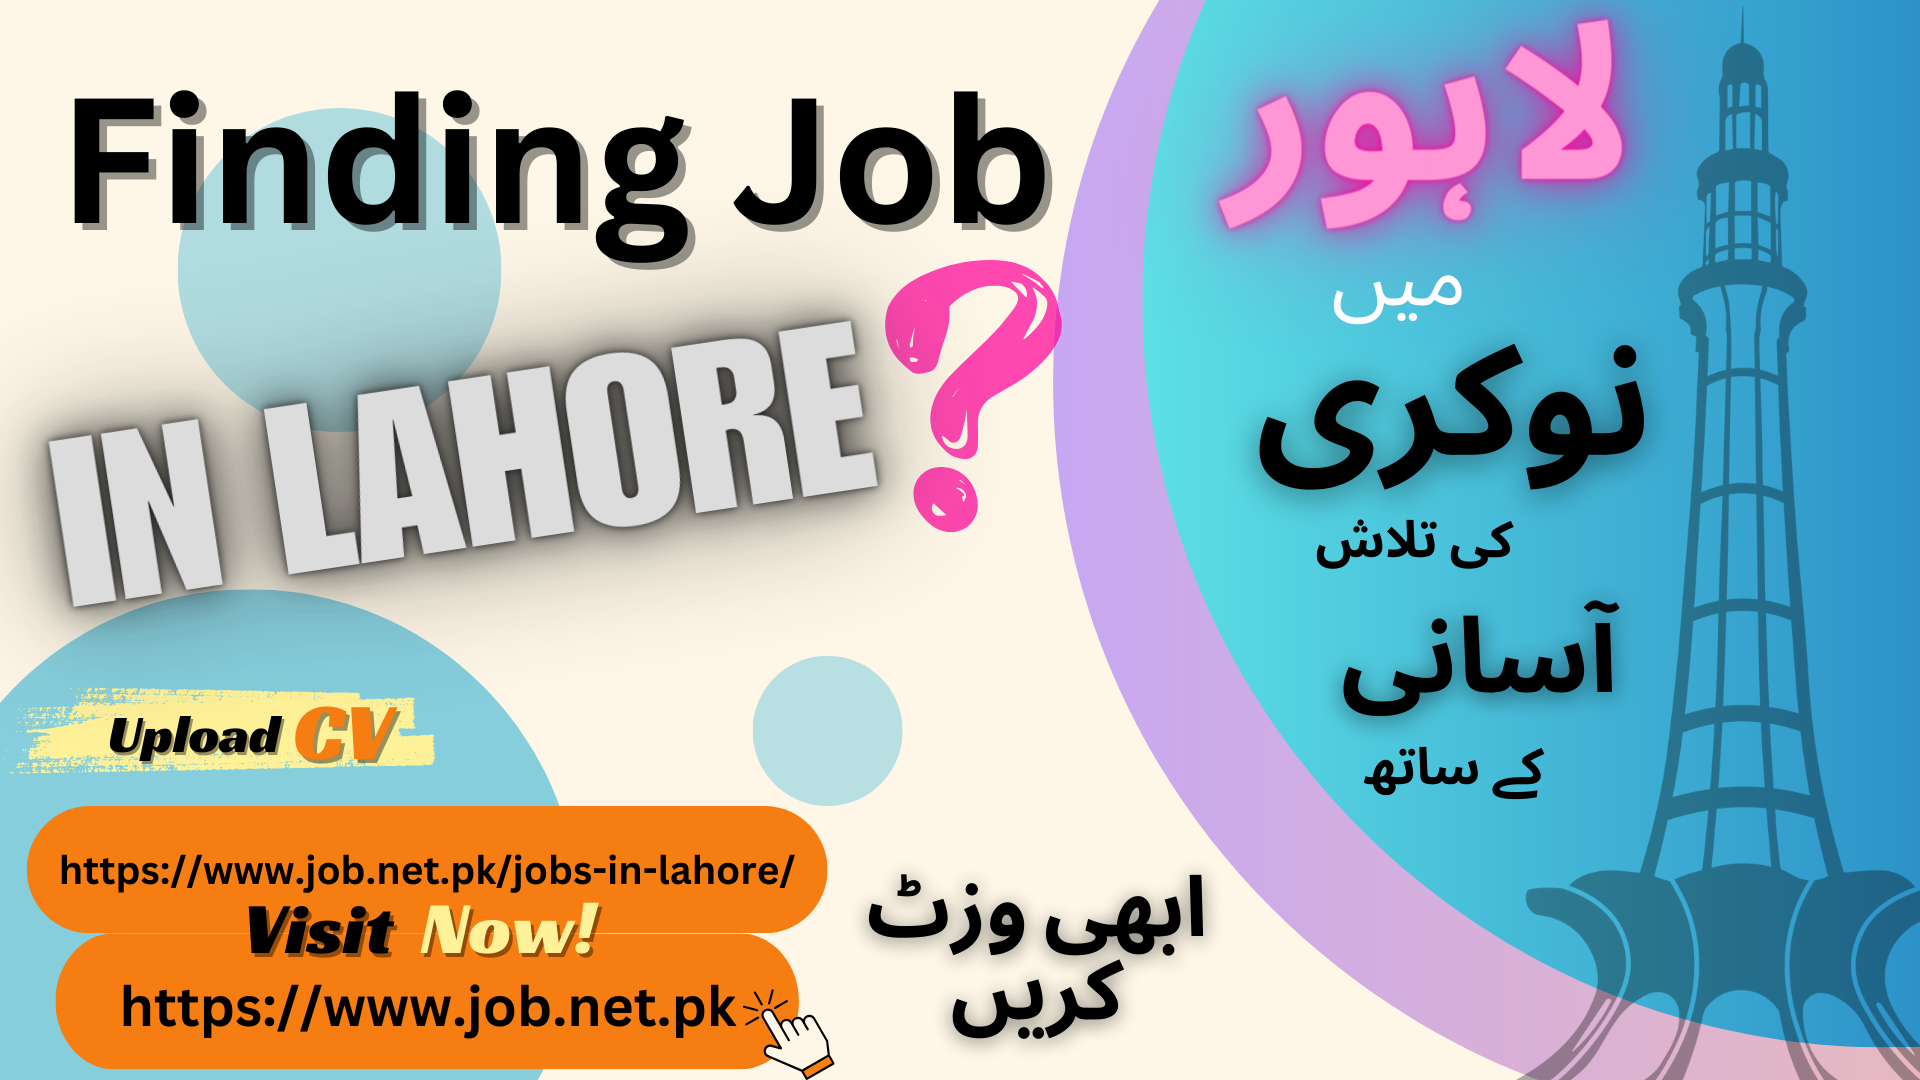 Jobs in Lahore